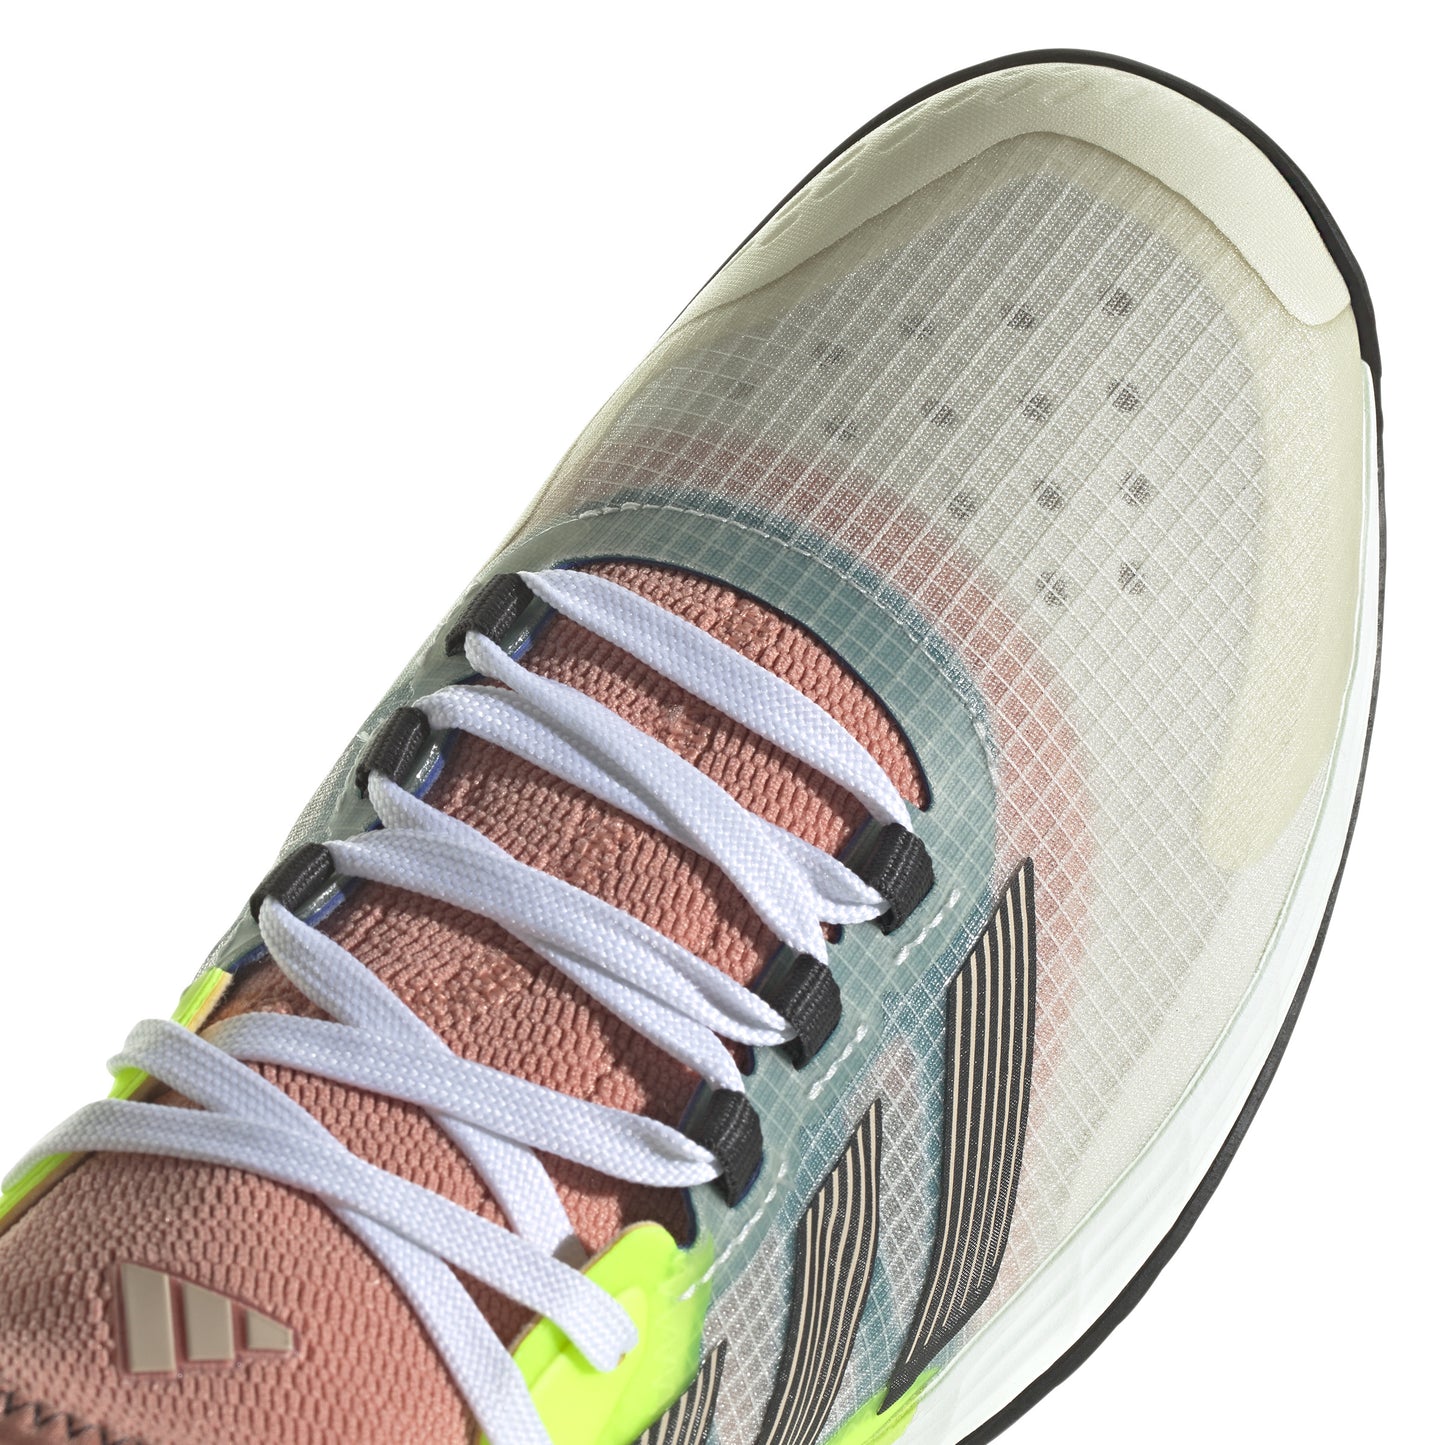 adidas Adizero Ubersonic 4.1 men tennis shoes - Off White/Carbon/Lemon IG5714